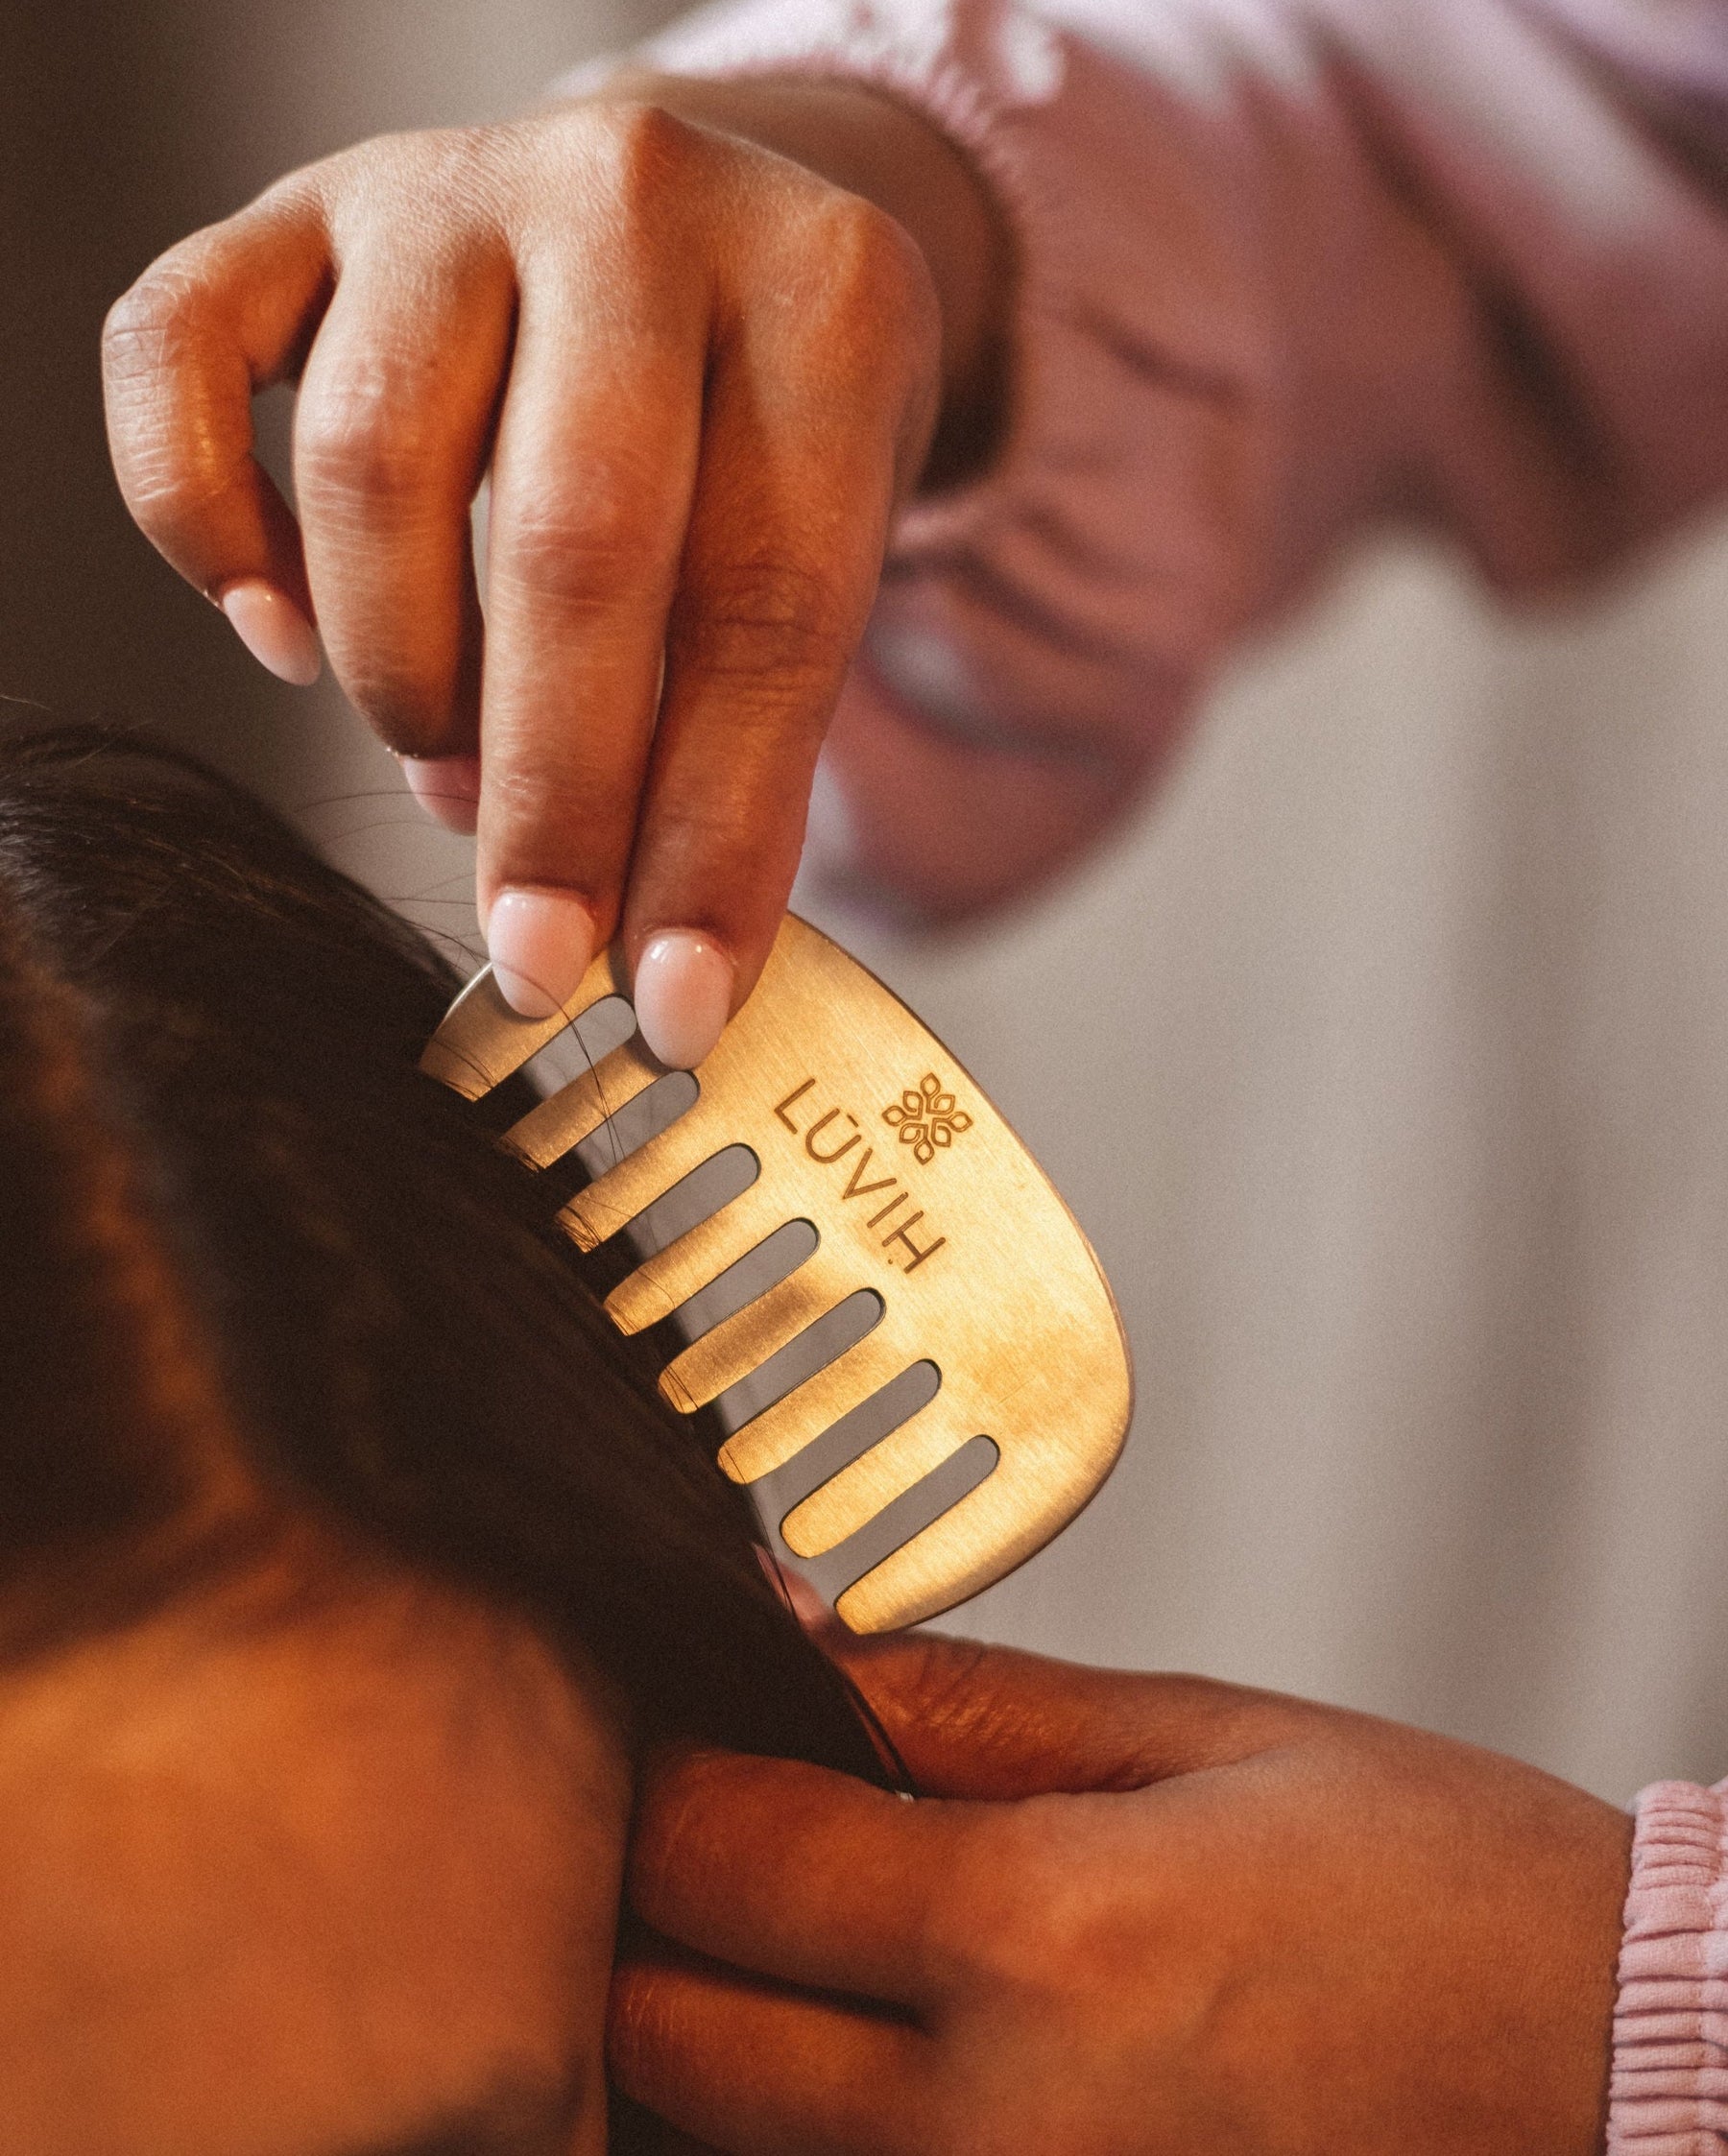 kansa comb for hair growth, hair loss. Head massage and scalp massage.